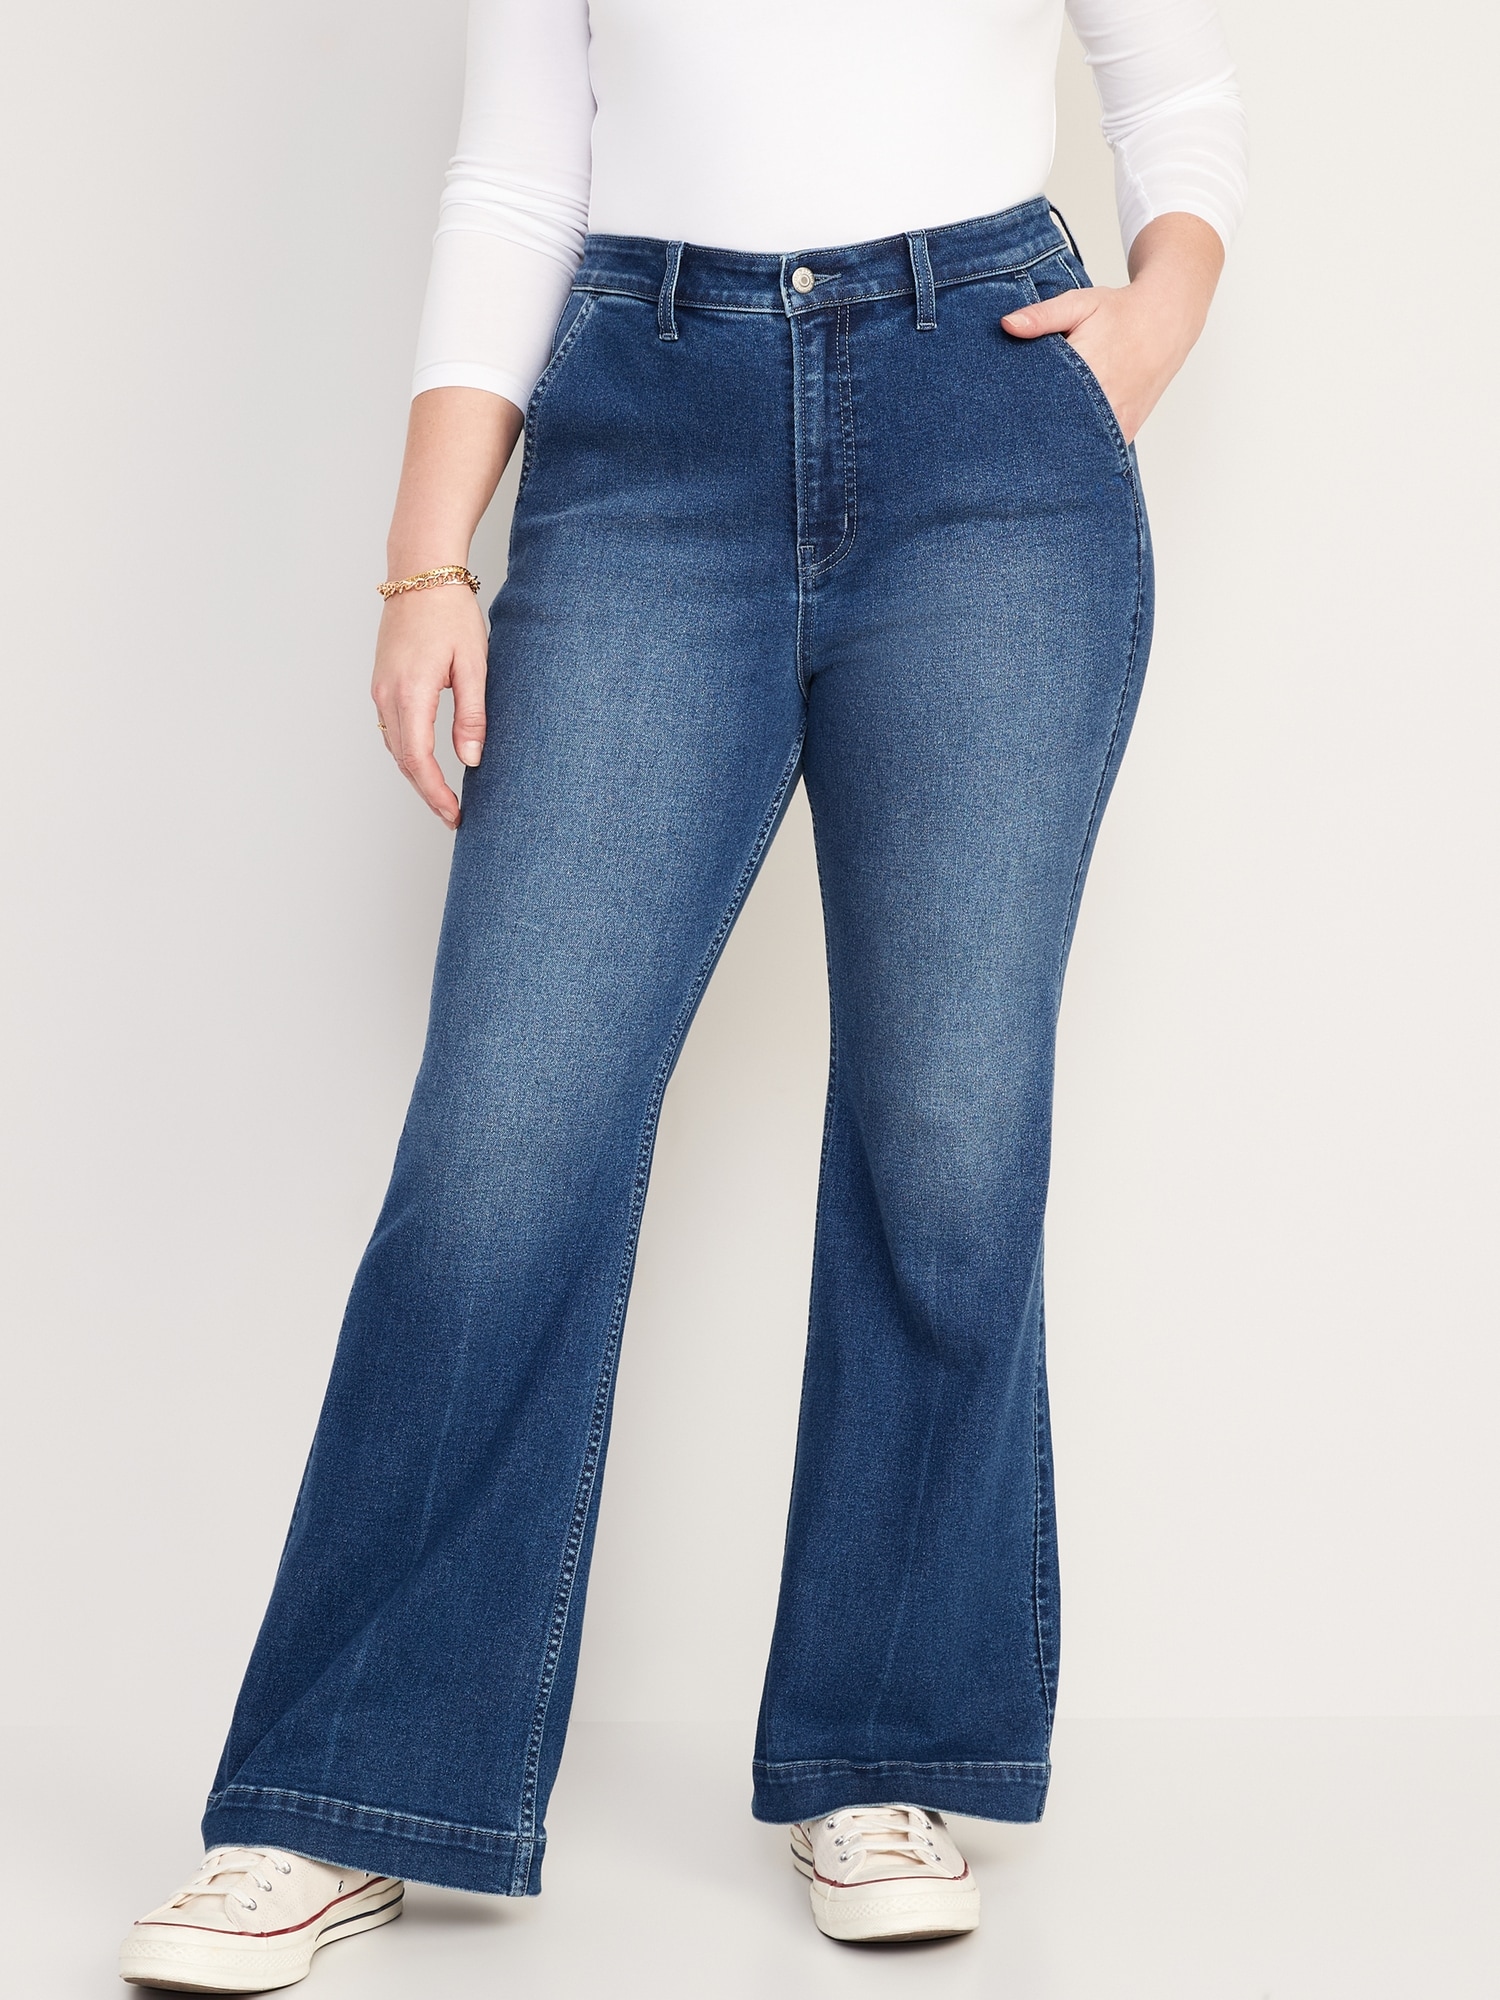 5 Petite-Friendly Trendy Jeans Under $100 - Amy Littleson